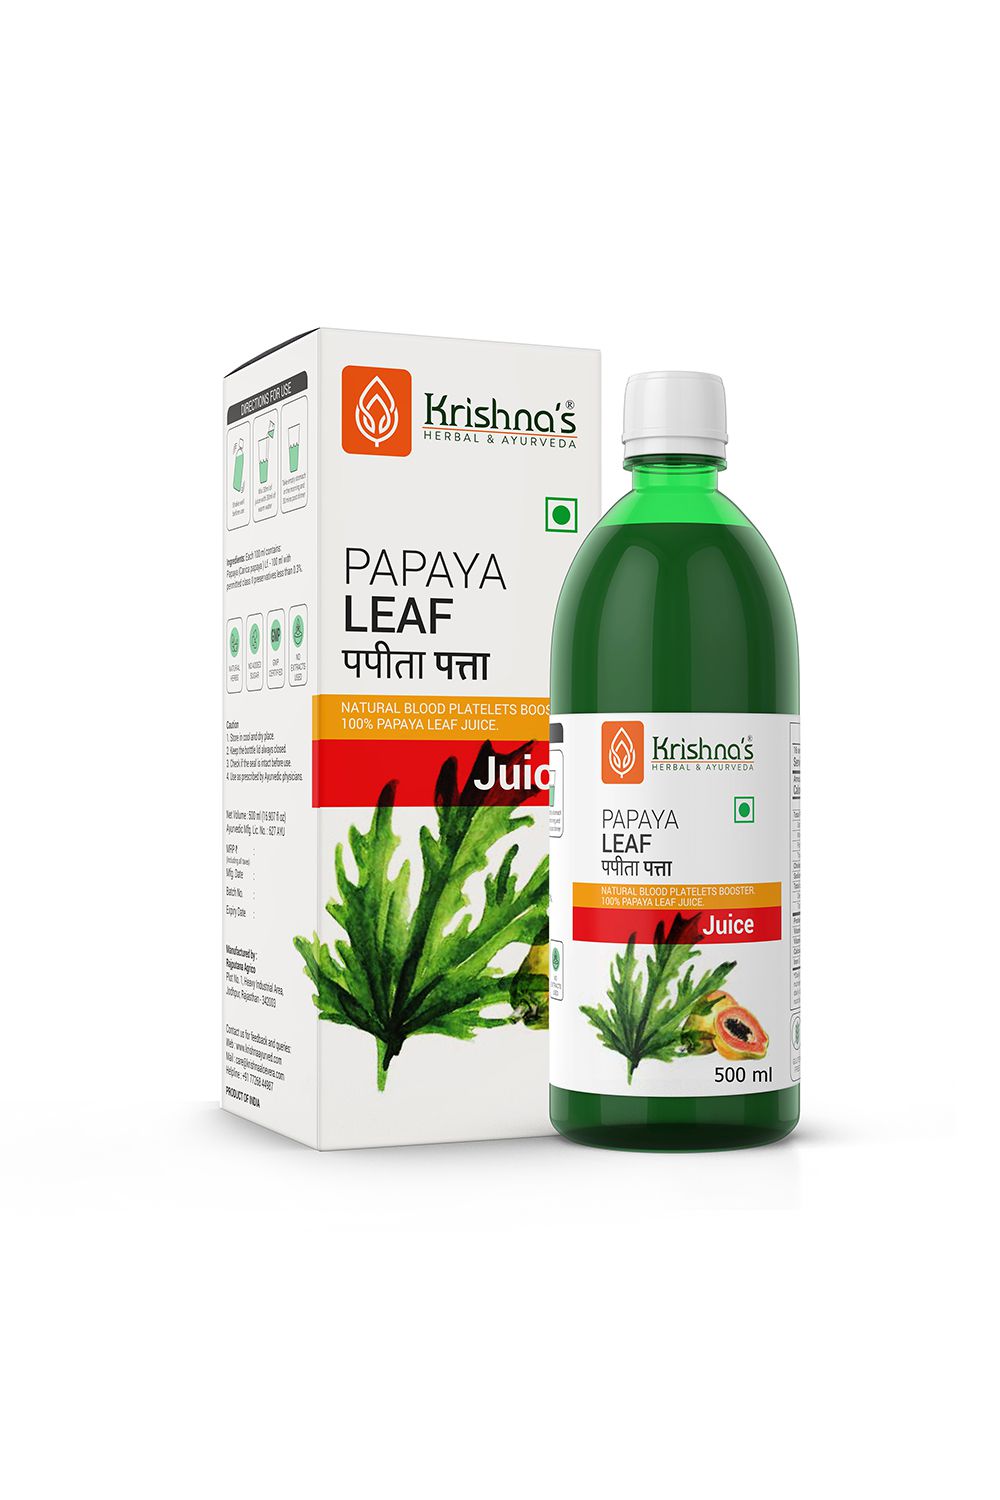     			Krishna's Herbal & Ayurveda Papaya Leaf Juice 500ml